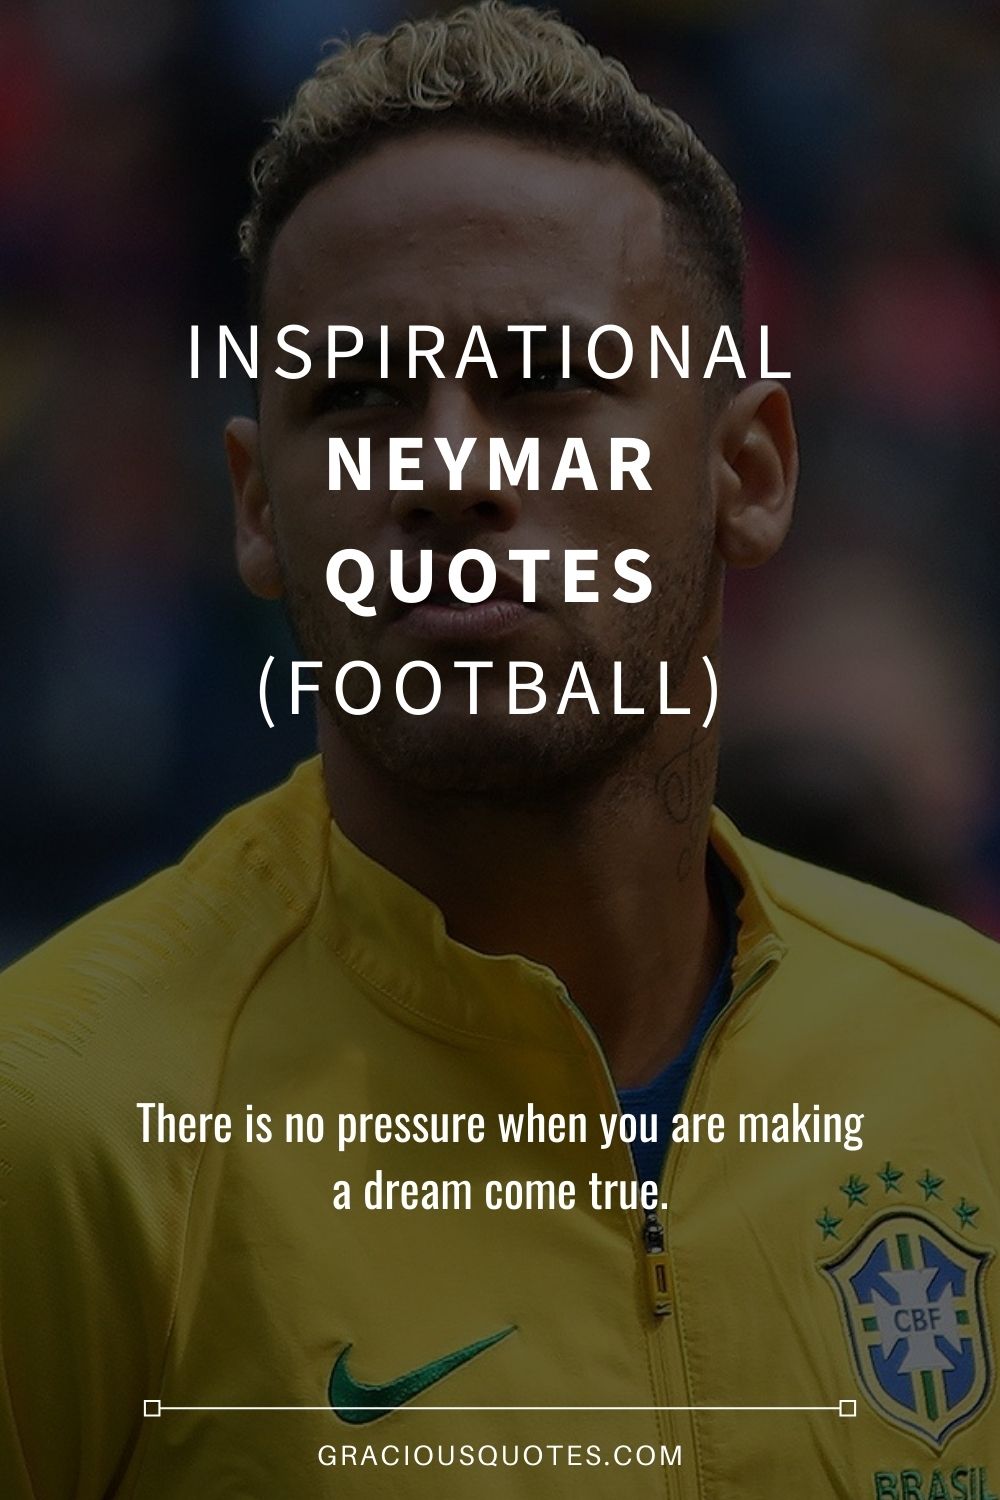 Inspirational Neymar Quotes (FOOTBALL) - Gracious Quotes